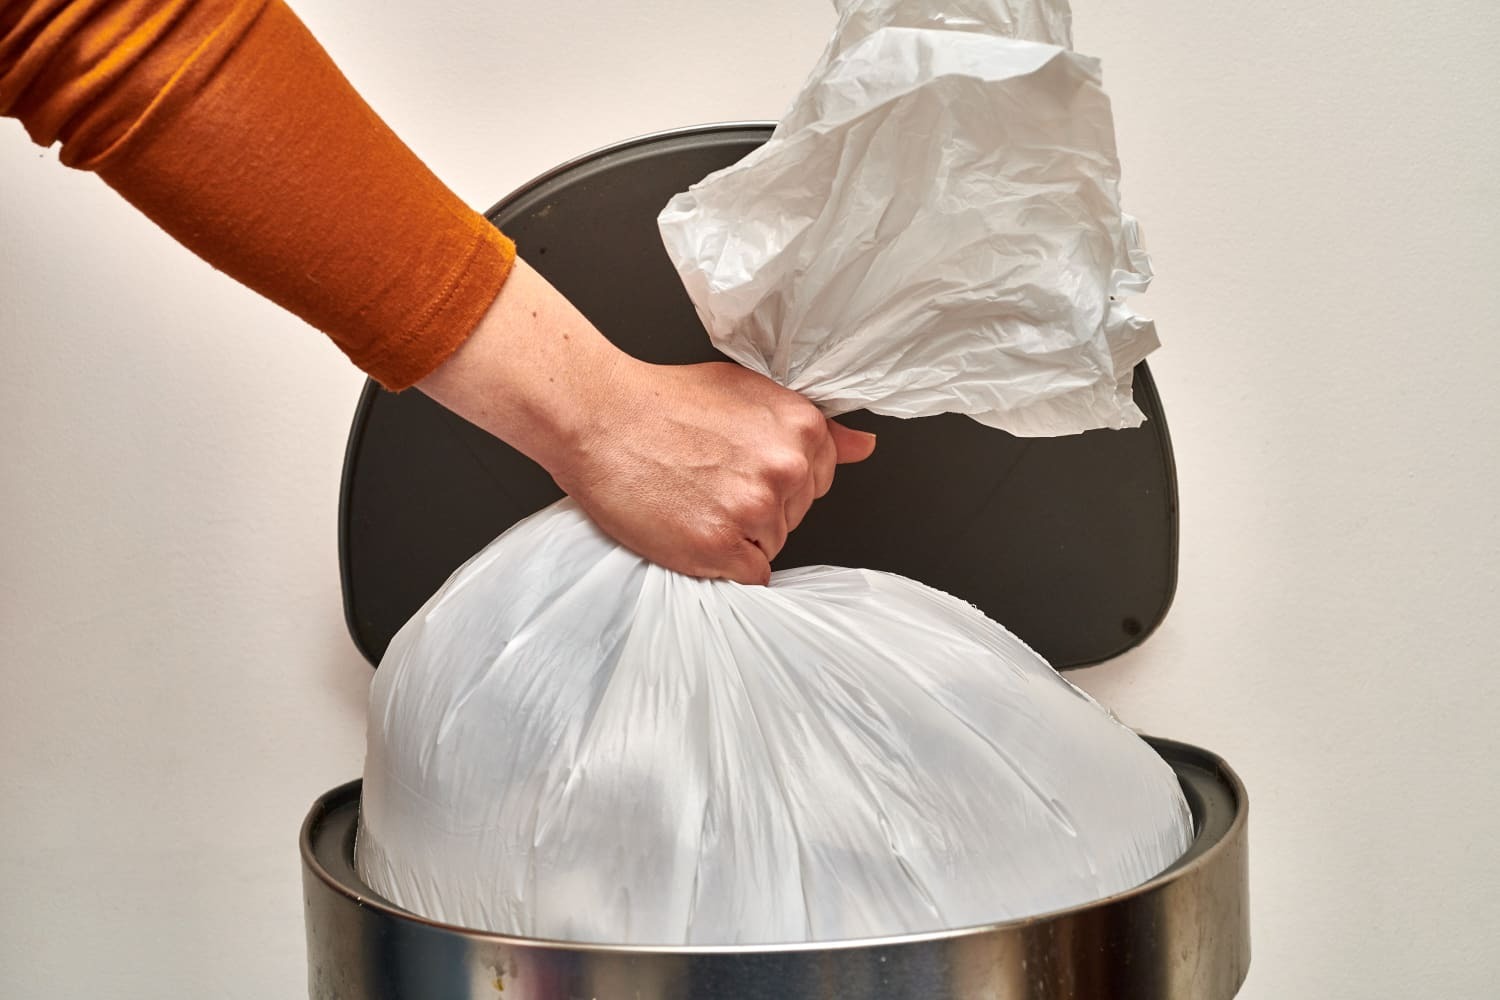 Reli. 8-10 Gallon Trash Bags Drawstring | 250 Count | 22x23 | 6, 8, 10 Gallon Drawstring Garbage Bags | White Trash Can Liners | Small - Medium